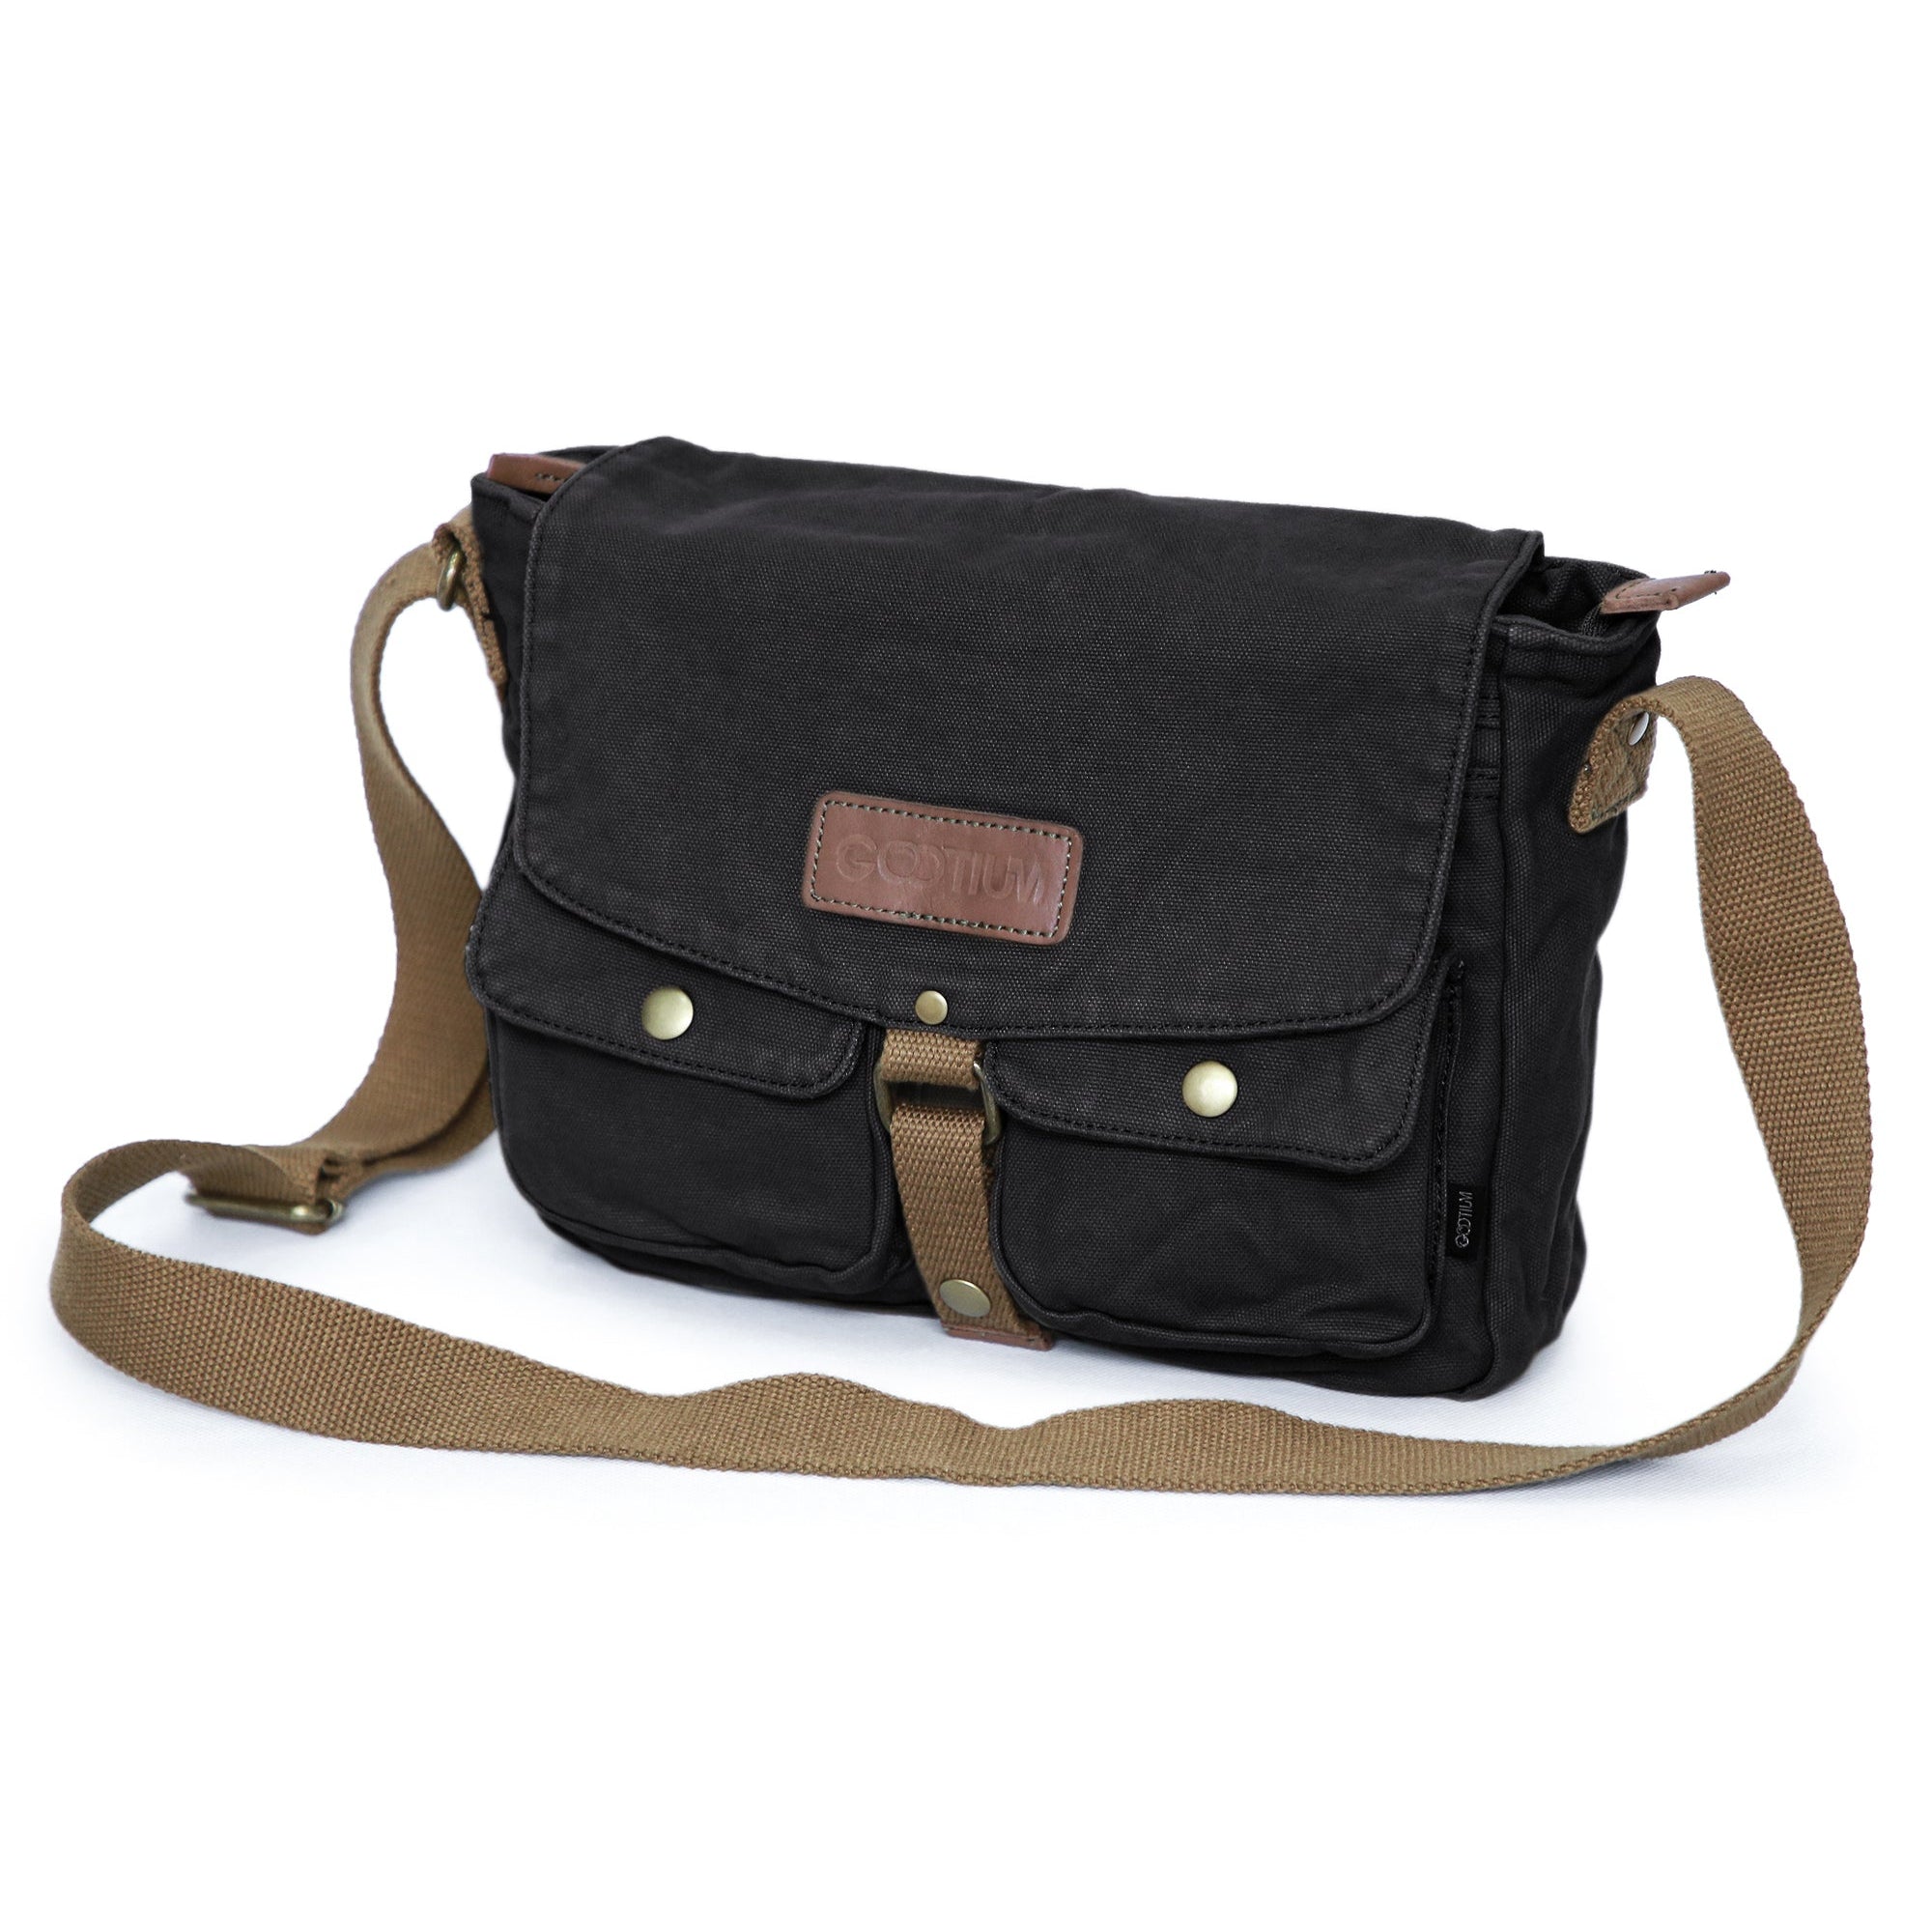 gootium Canvas Messenger Bag - Vintage Crossbody Shoulder Bag